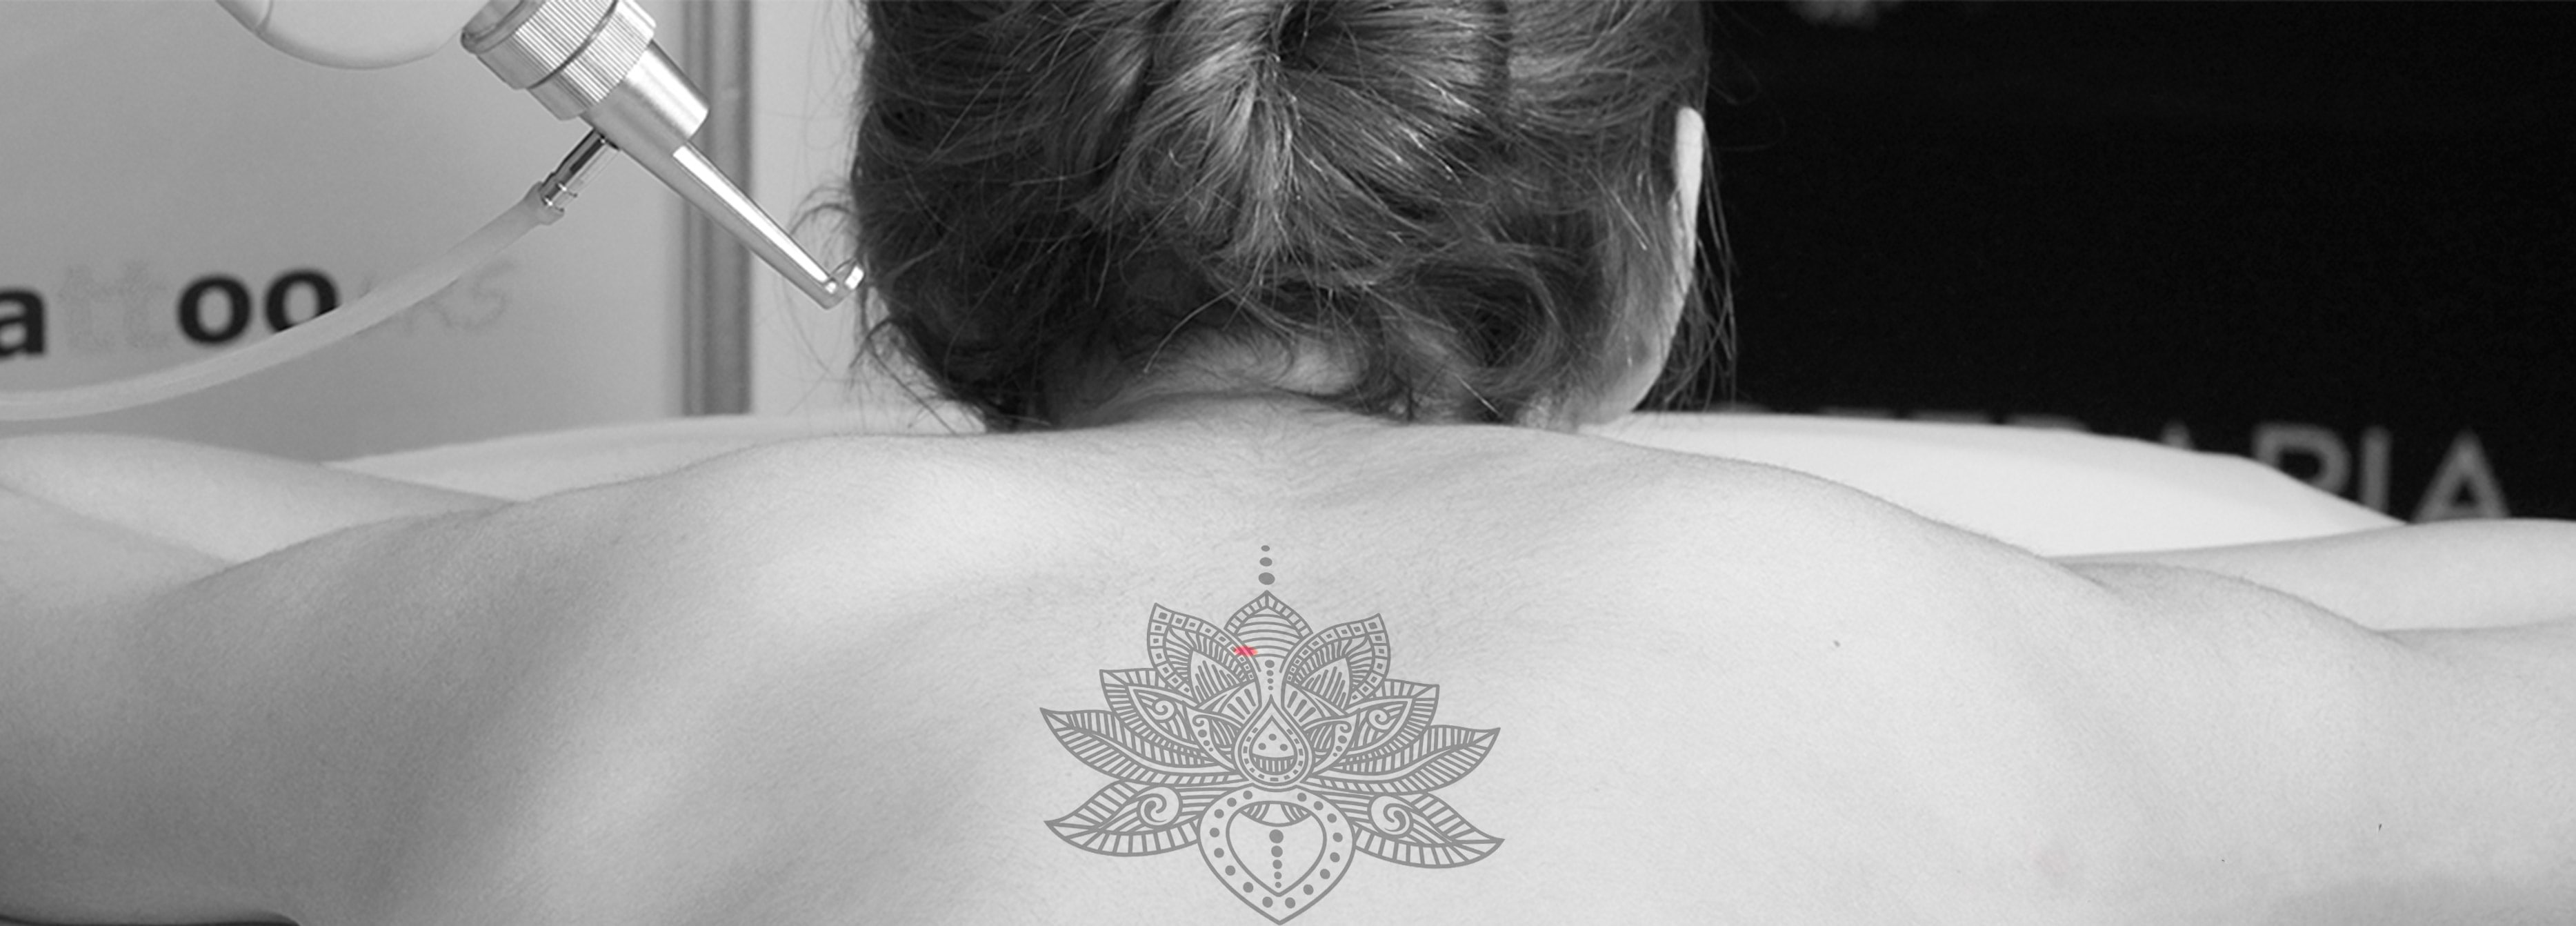 Eliminacion-de-tatuajes-tattoo-LRS-min